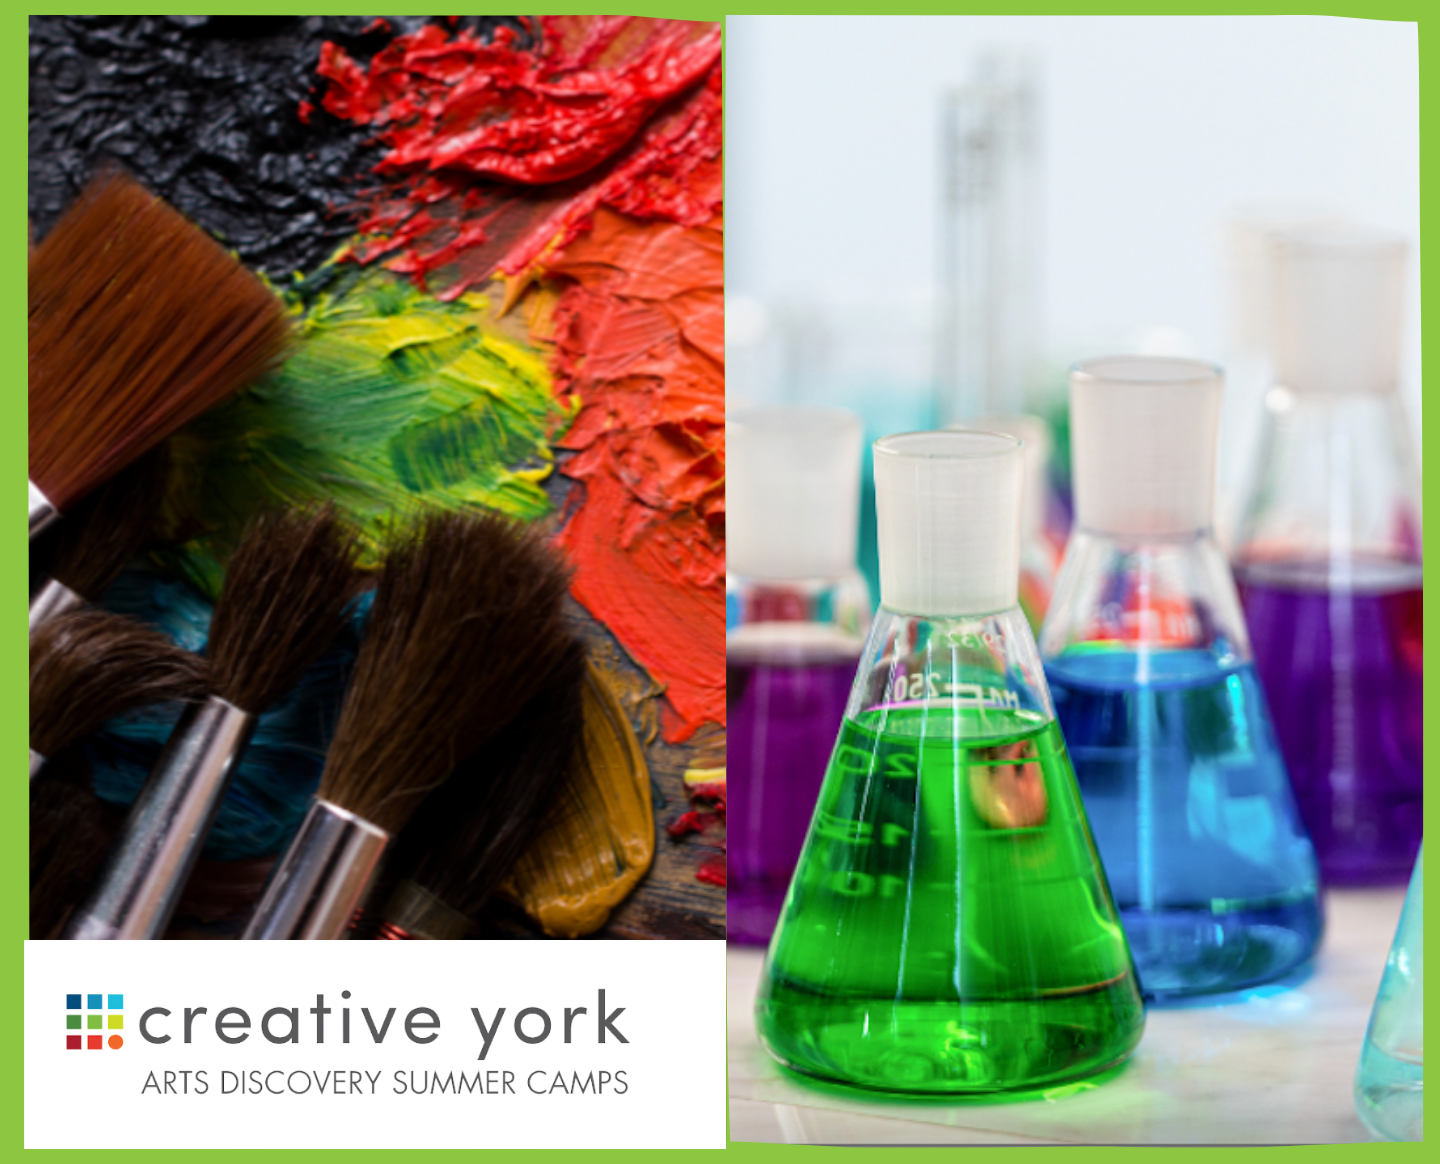 Creative York Art and Science